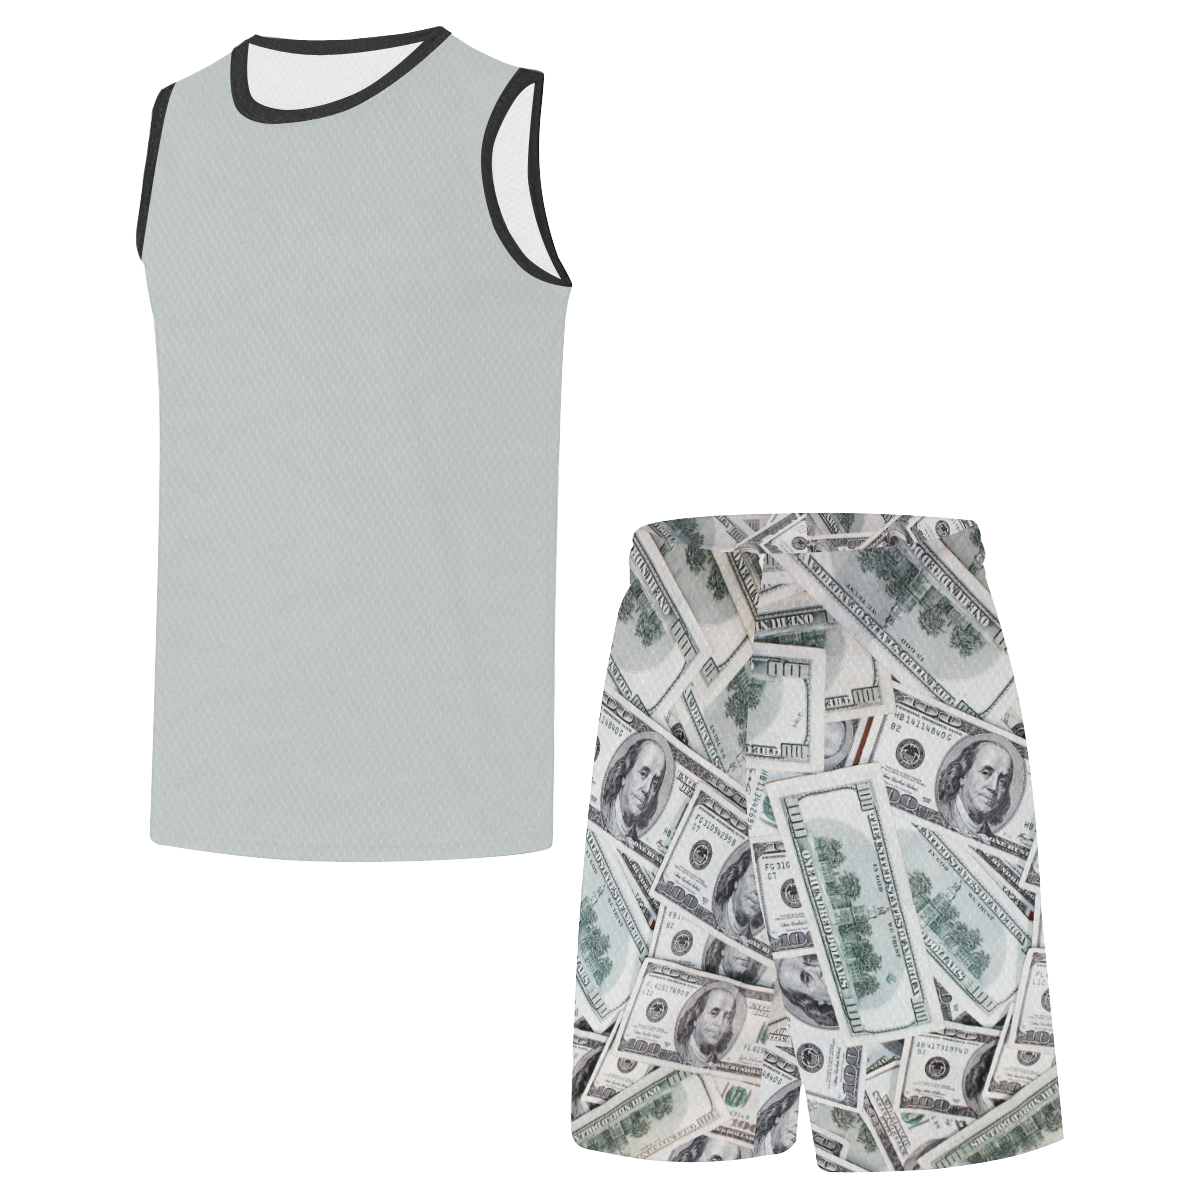 Cash Money / Hundred Dollar Bills All Over Print Basketball Uniform